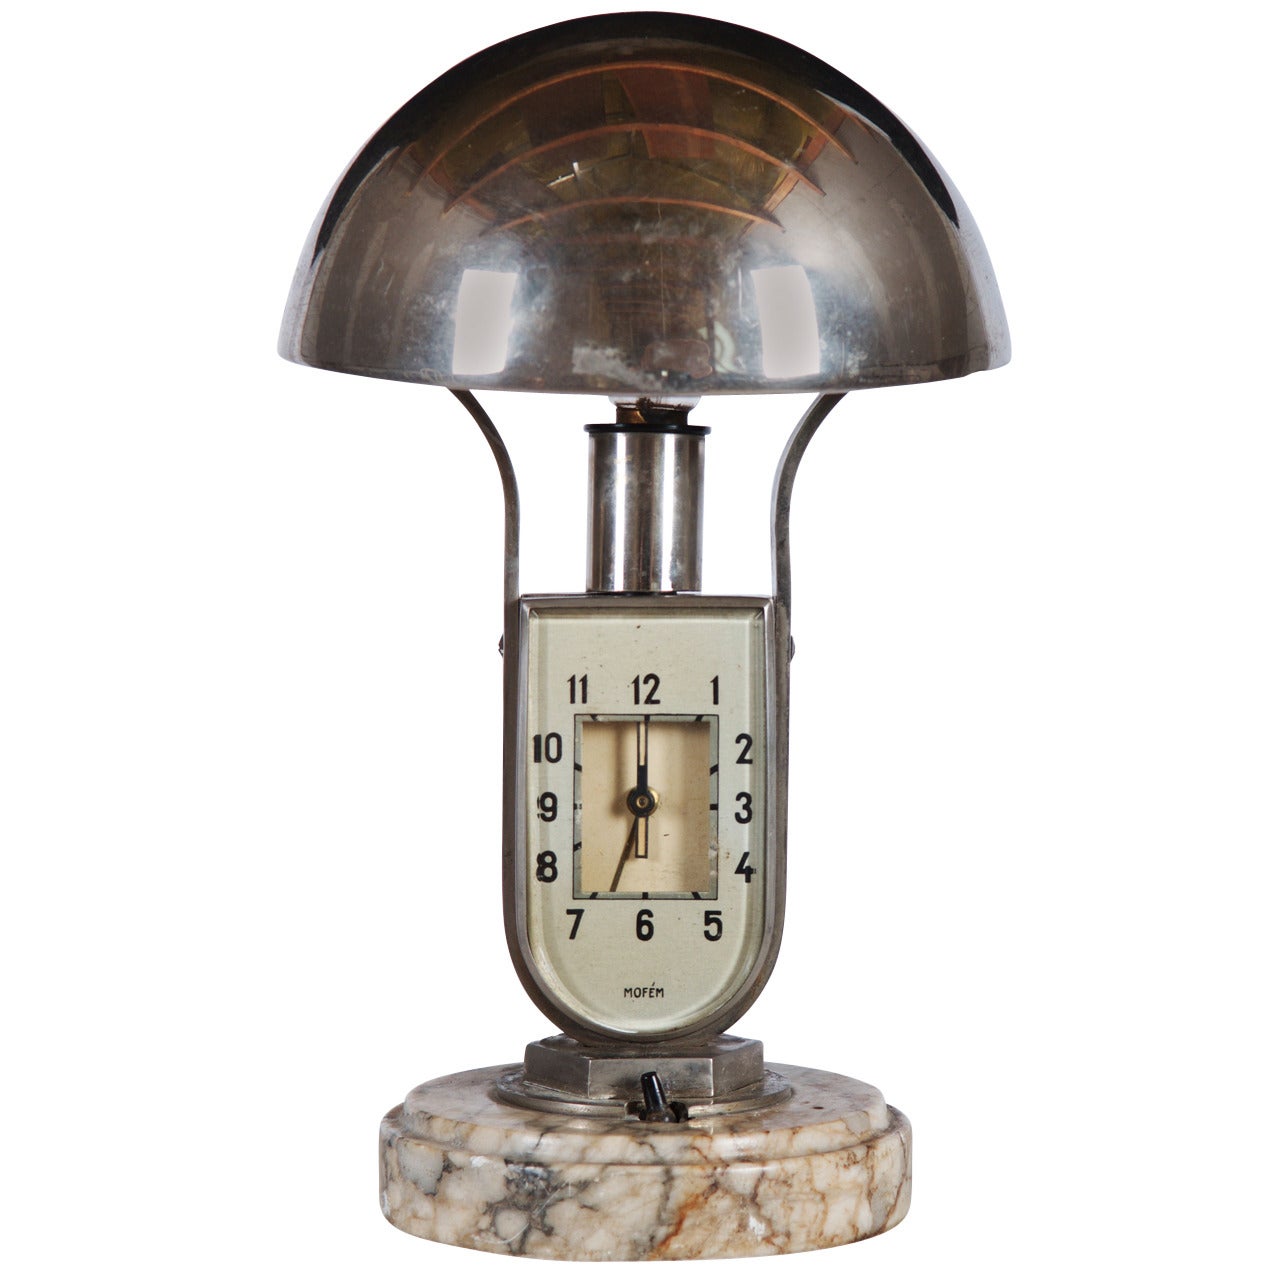 Art Deco Mofem Table Lamp with Integrated Alarm Clock